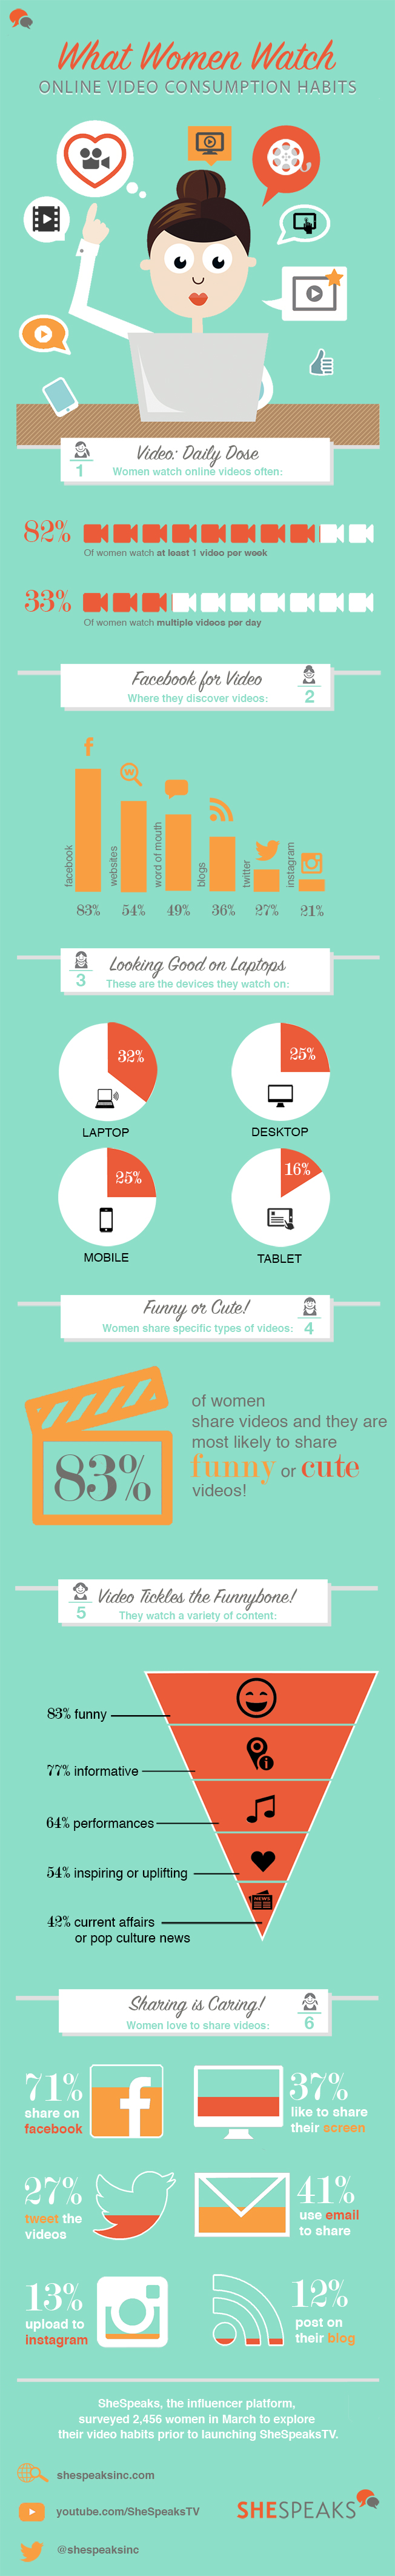 What women watch - video consumption habits